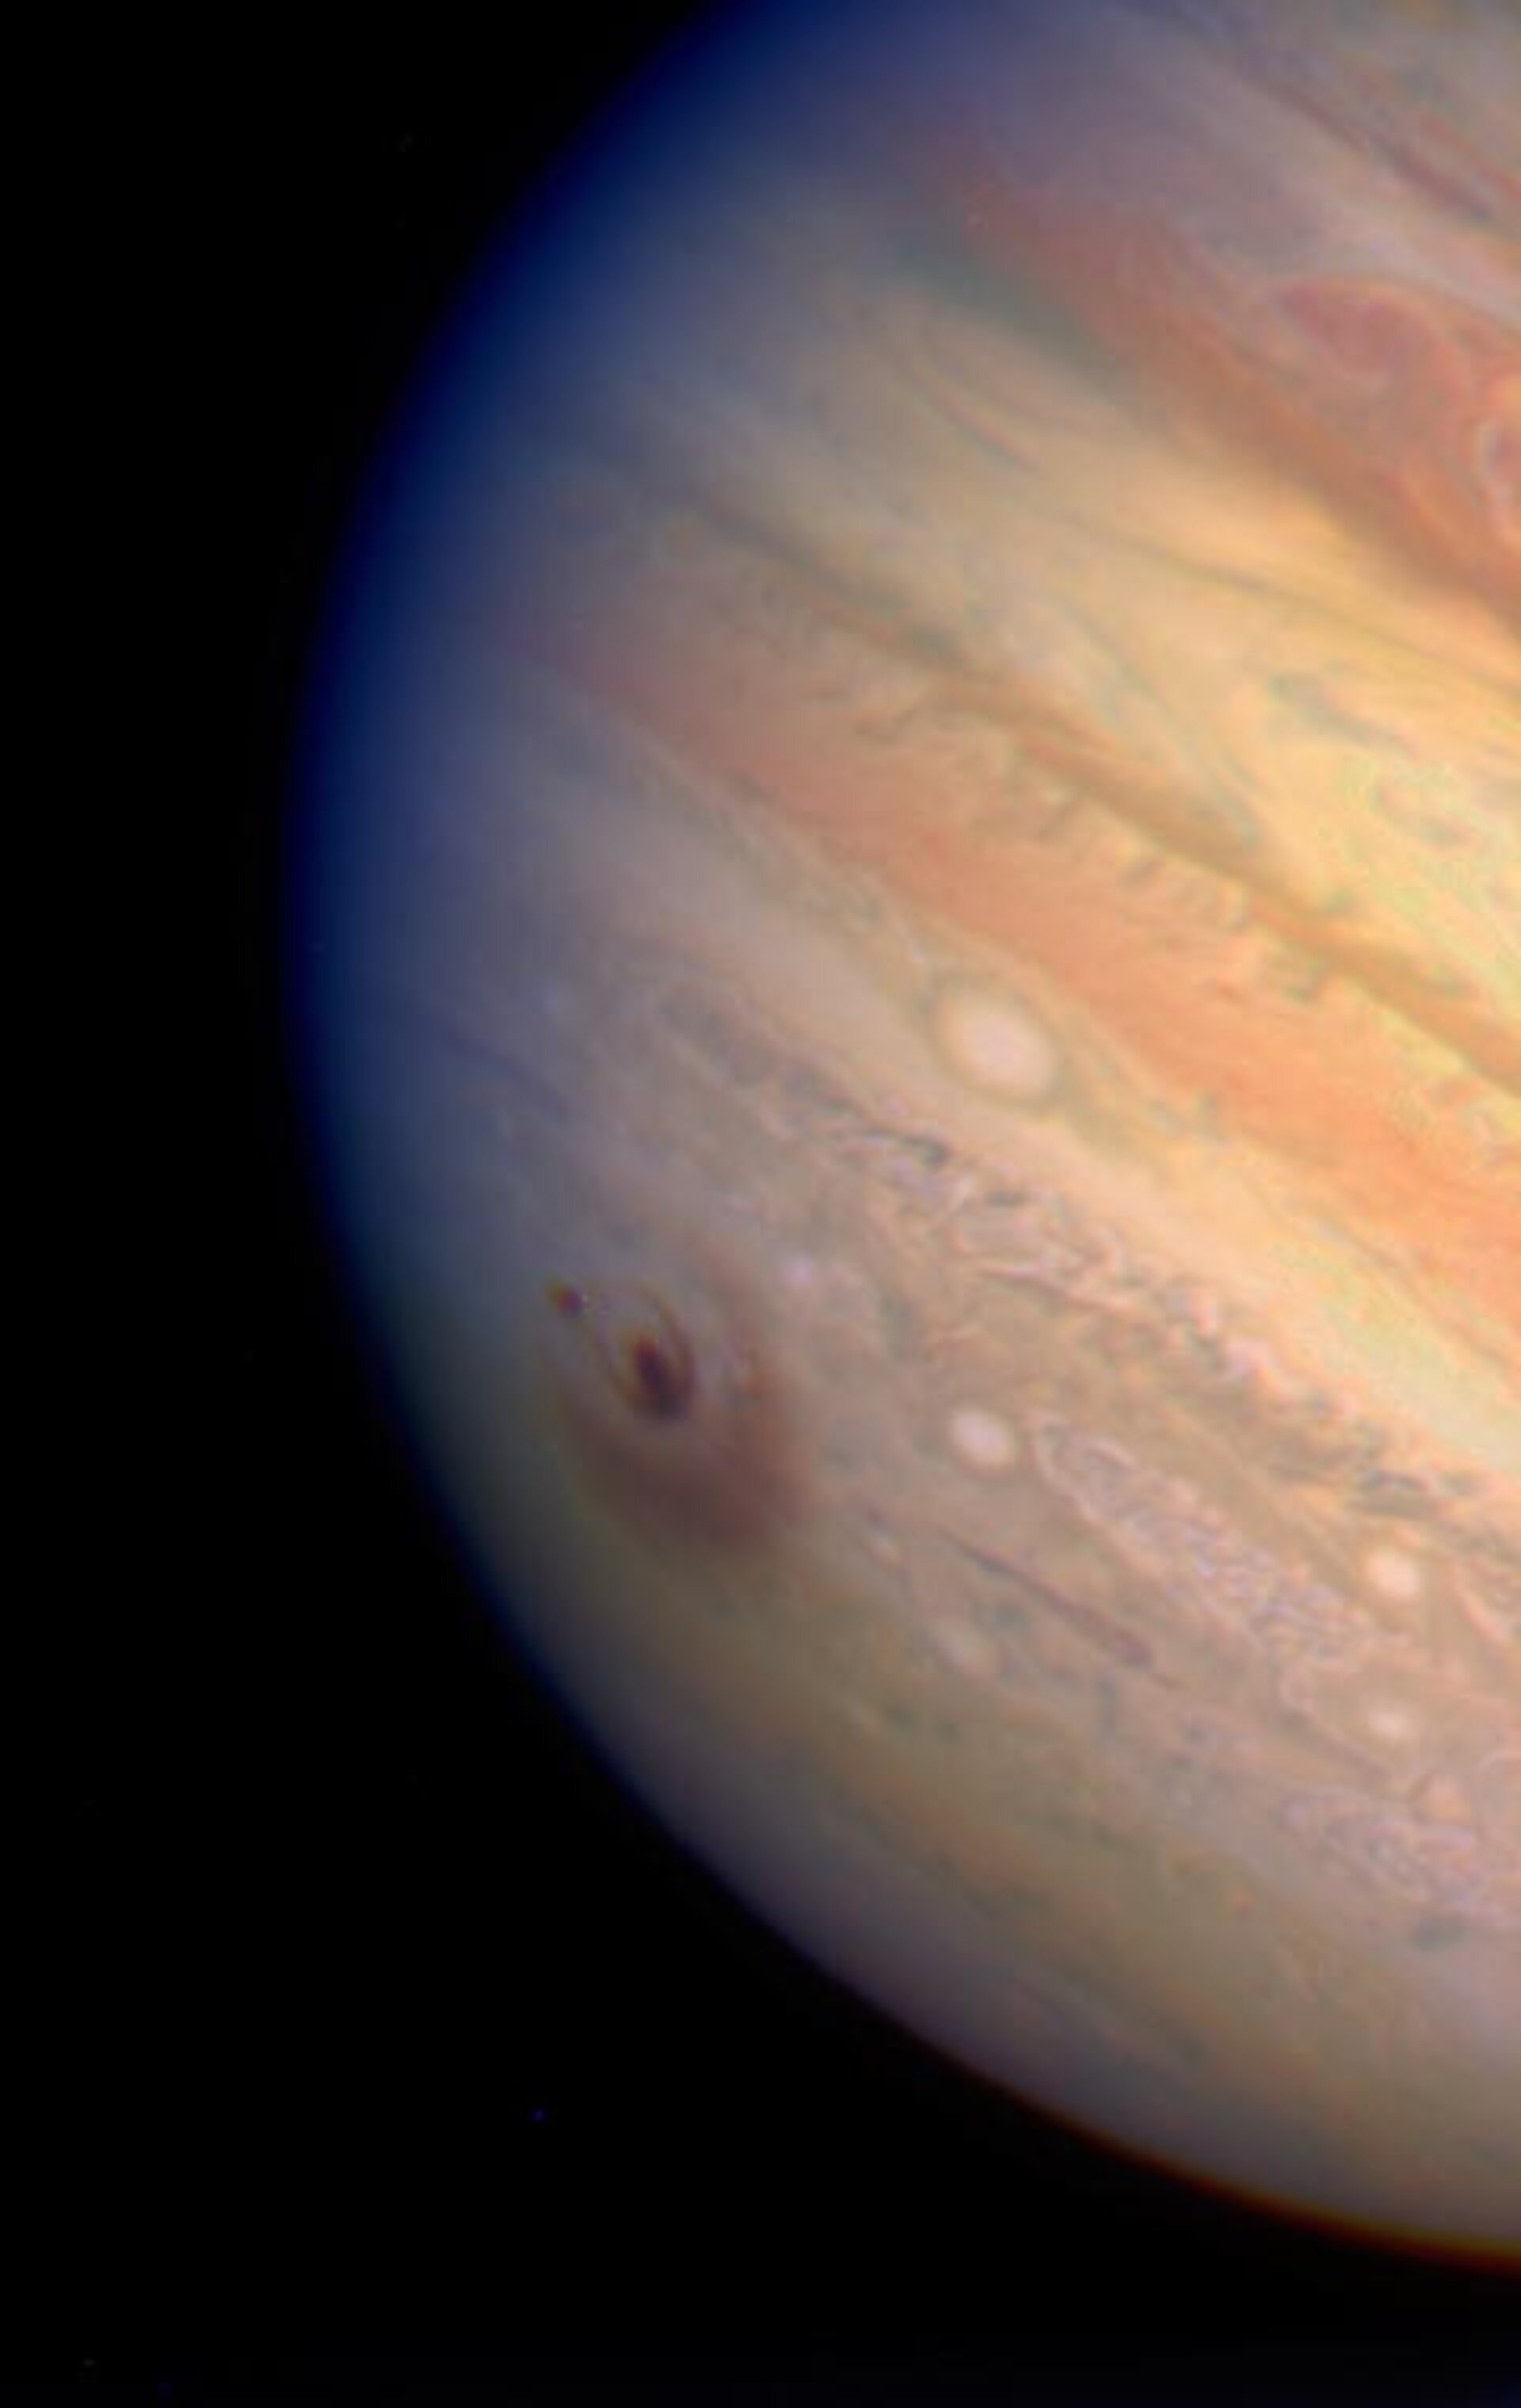 Jupiter after being hit by Comet Shoemaker-Levy